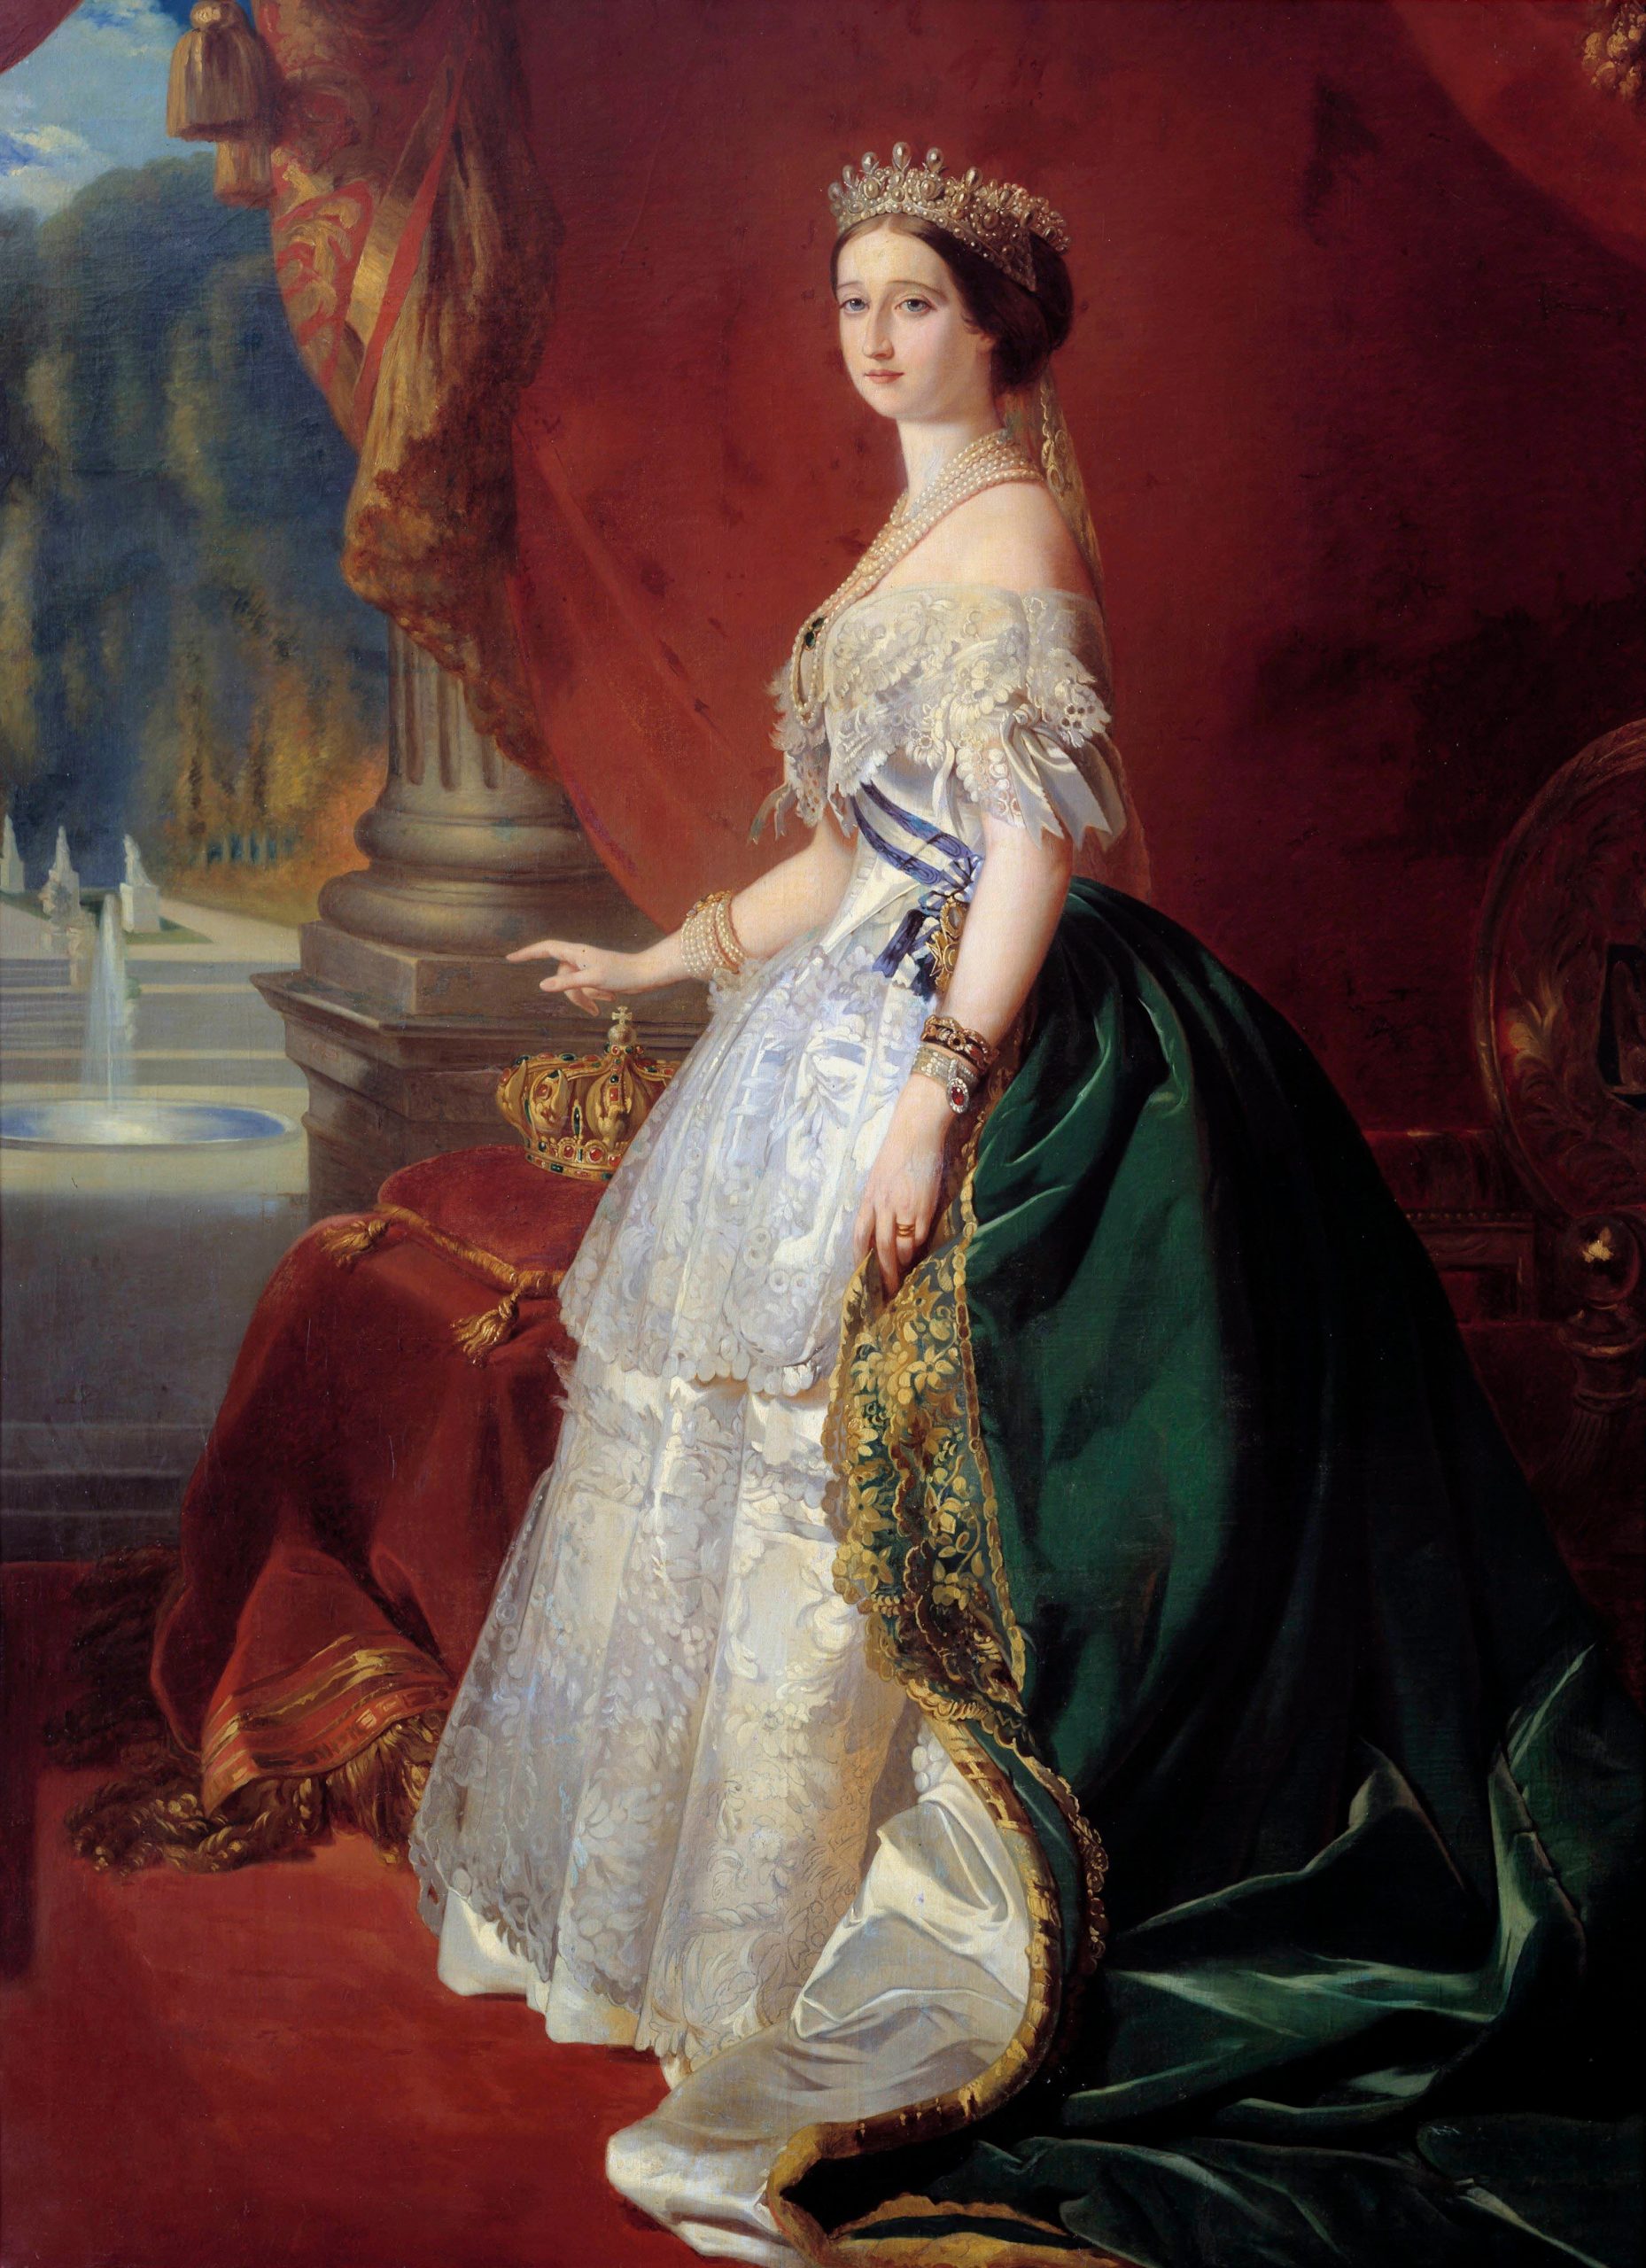 30 JANVIER 1853 : NAPOLÉON III ÉPOUSE EUGÉNIE DE MONTIJO